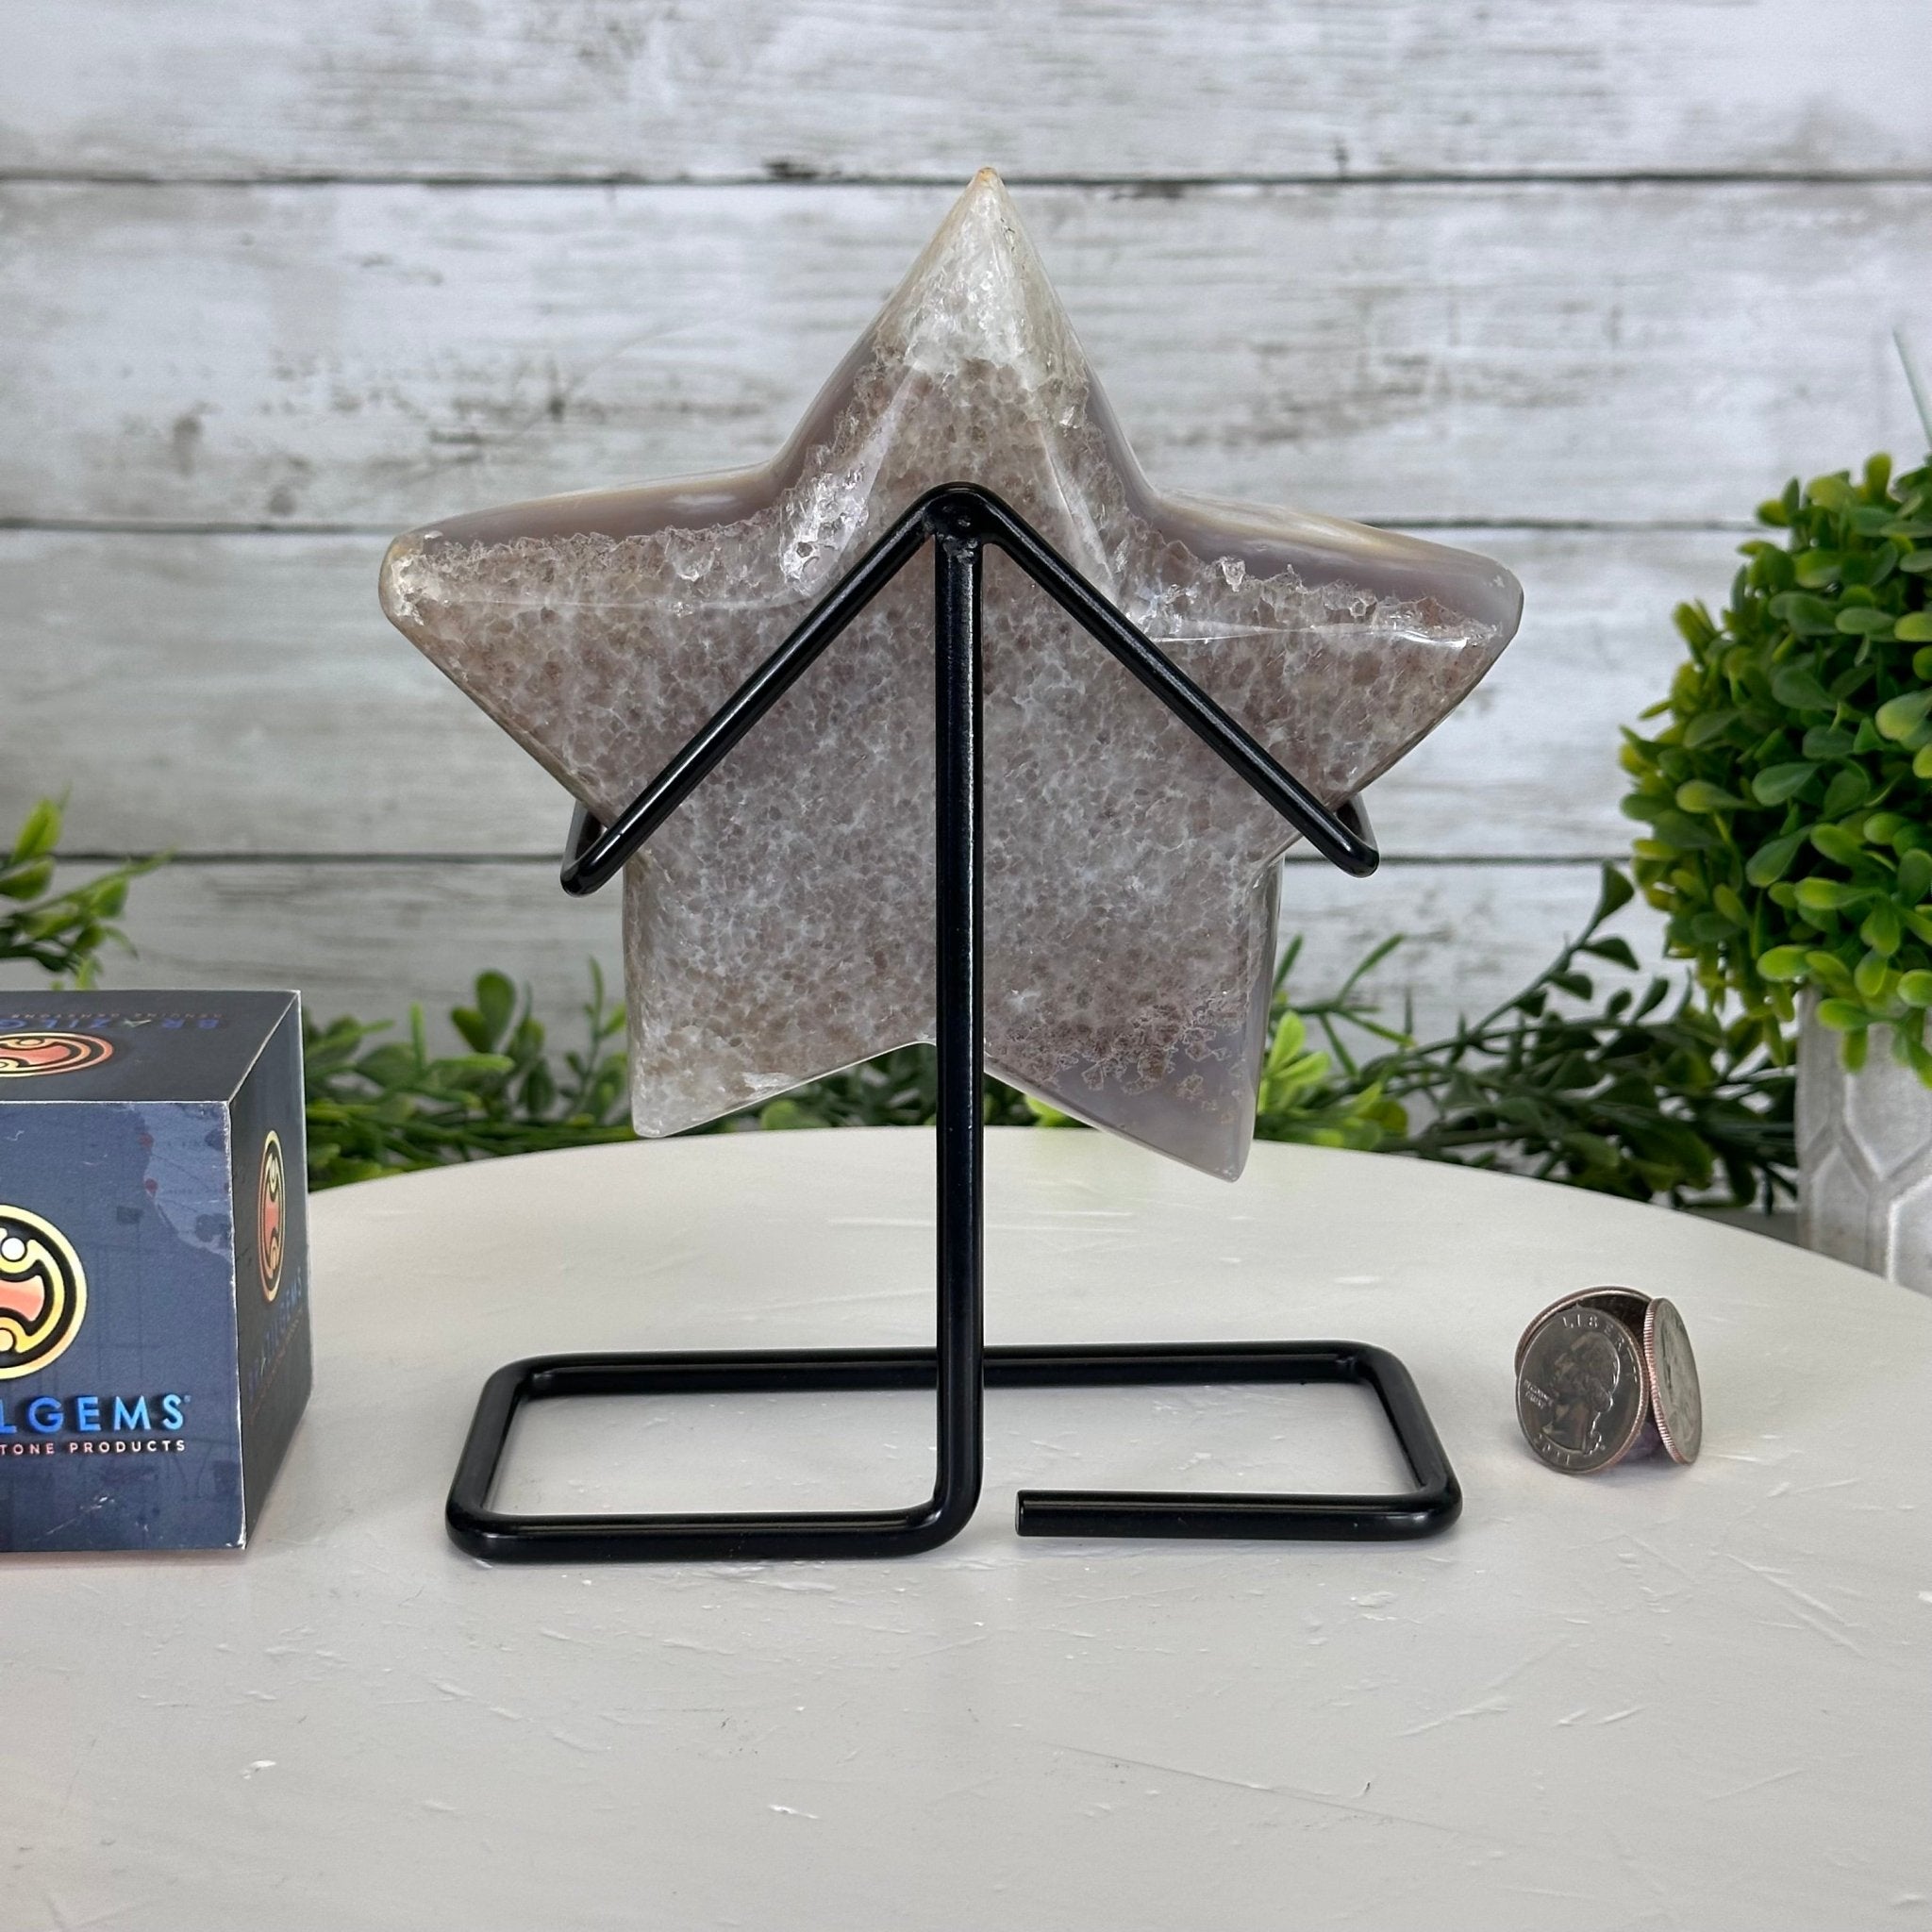 Polished Agate Star on a Metal Stand, 2.7 lbs & 7.3" Tall #5273-0015 - Brazil GemsBrazil GemsPolished Agate Star on a Metal Stand, 2.7 lbs & 7.3" Tall #5273-0015Stars5273-0015